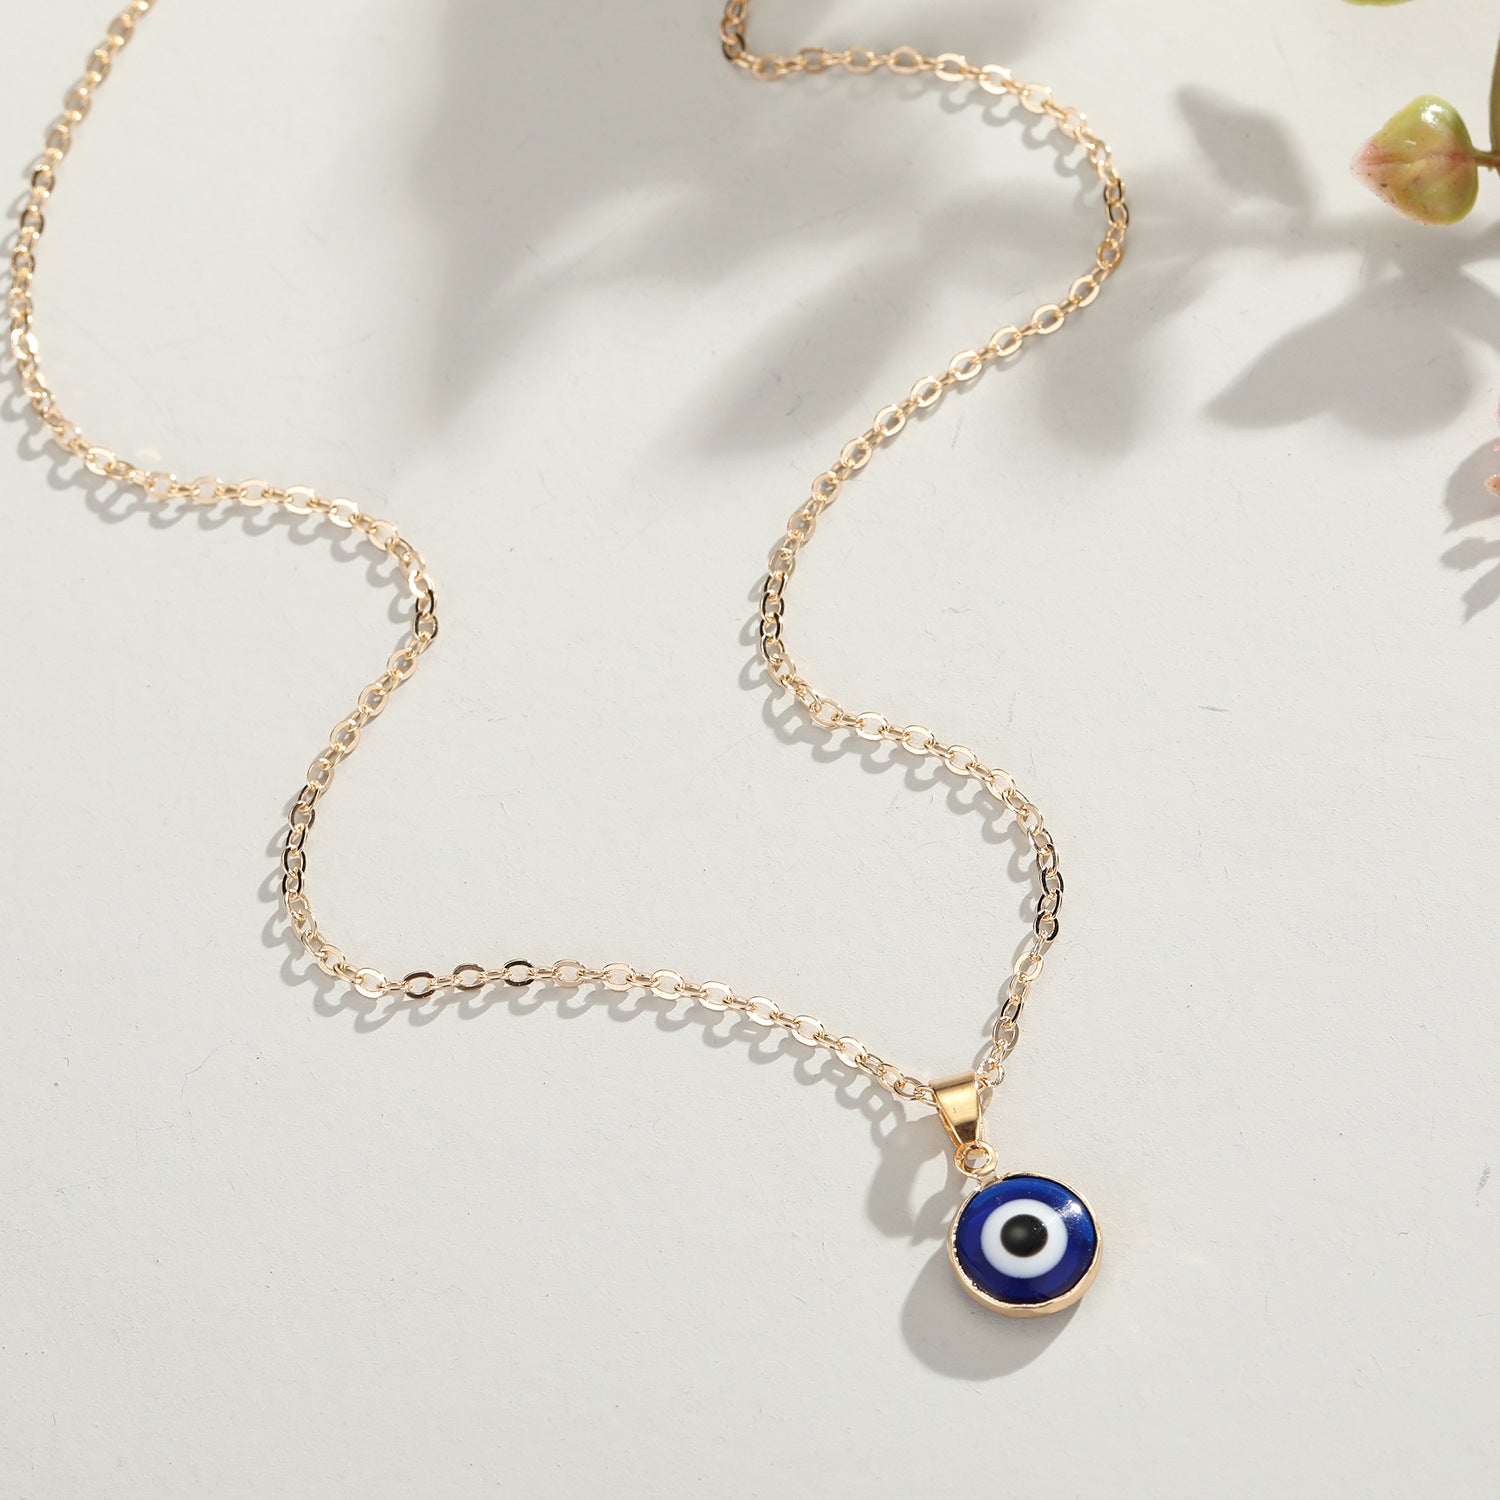 Arzonai Turkish Blue Eyes Pendant Necklace Wild Surround Rim Eyes Necklace Wholesale Ladies Accessories